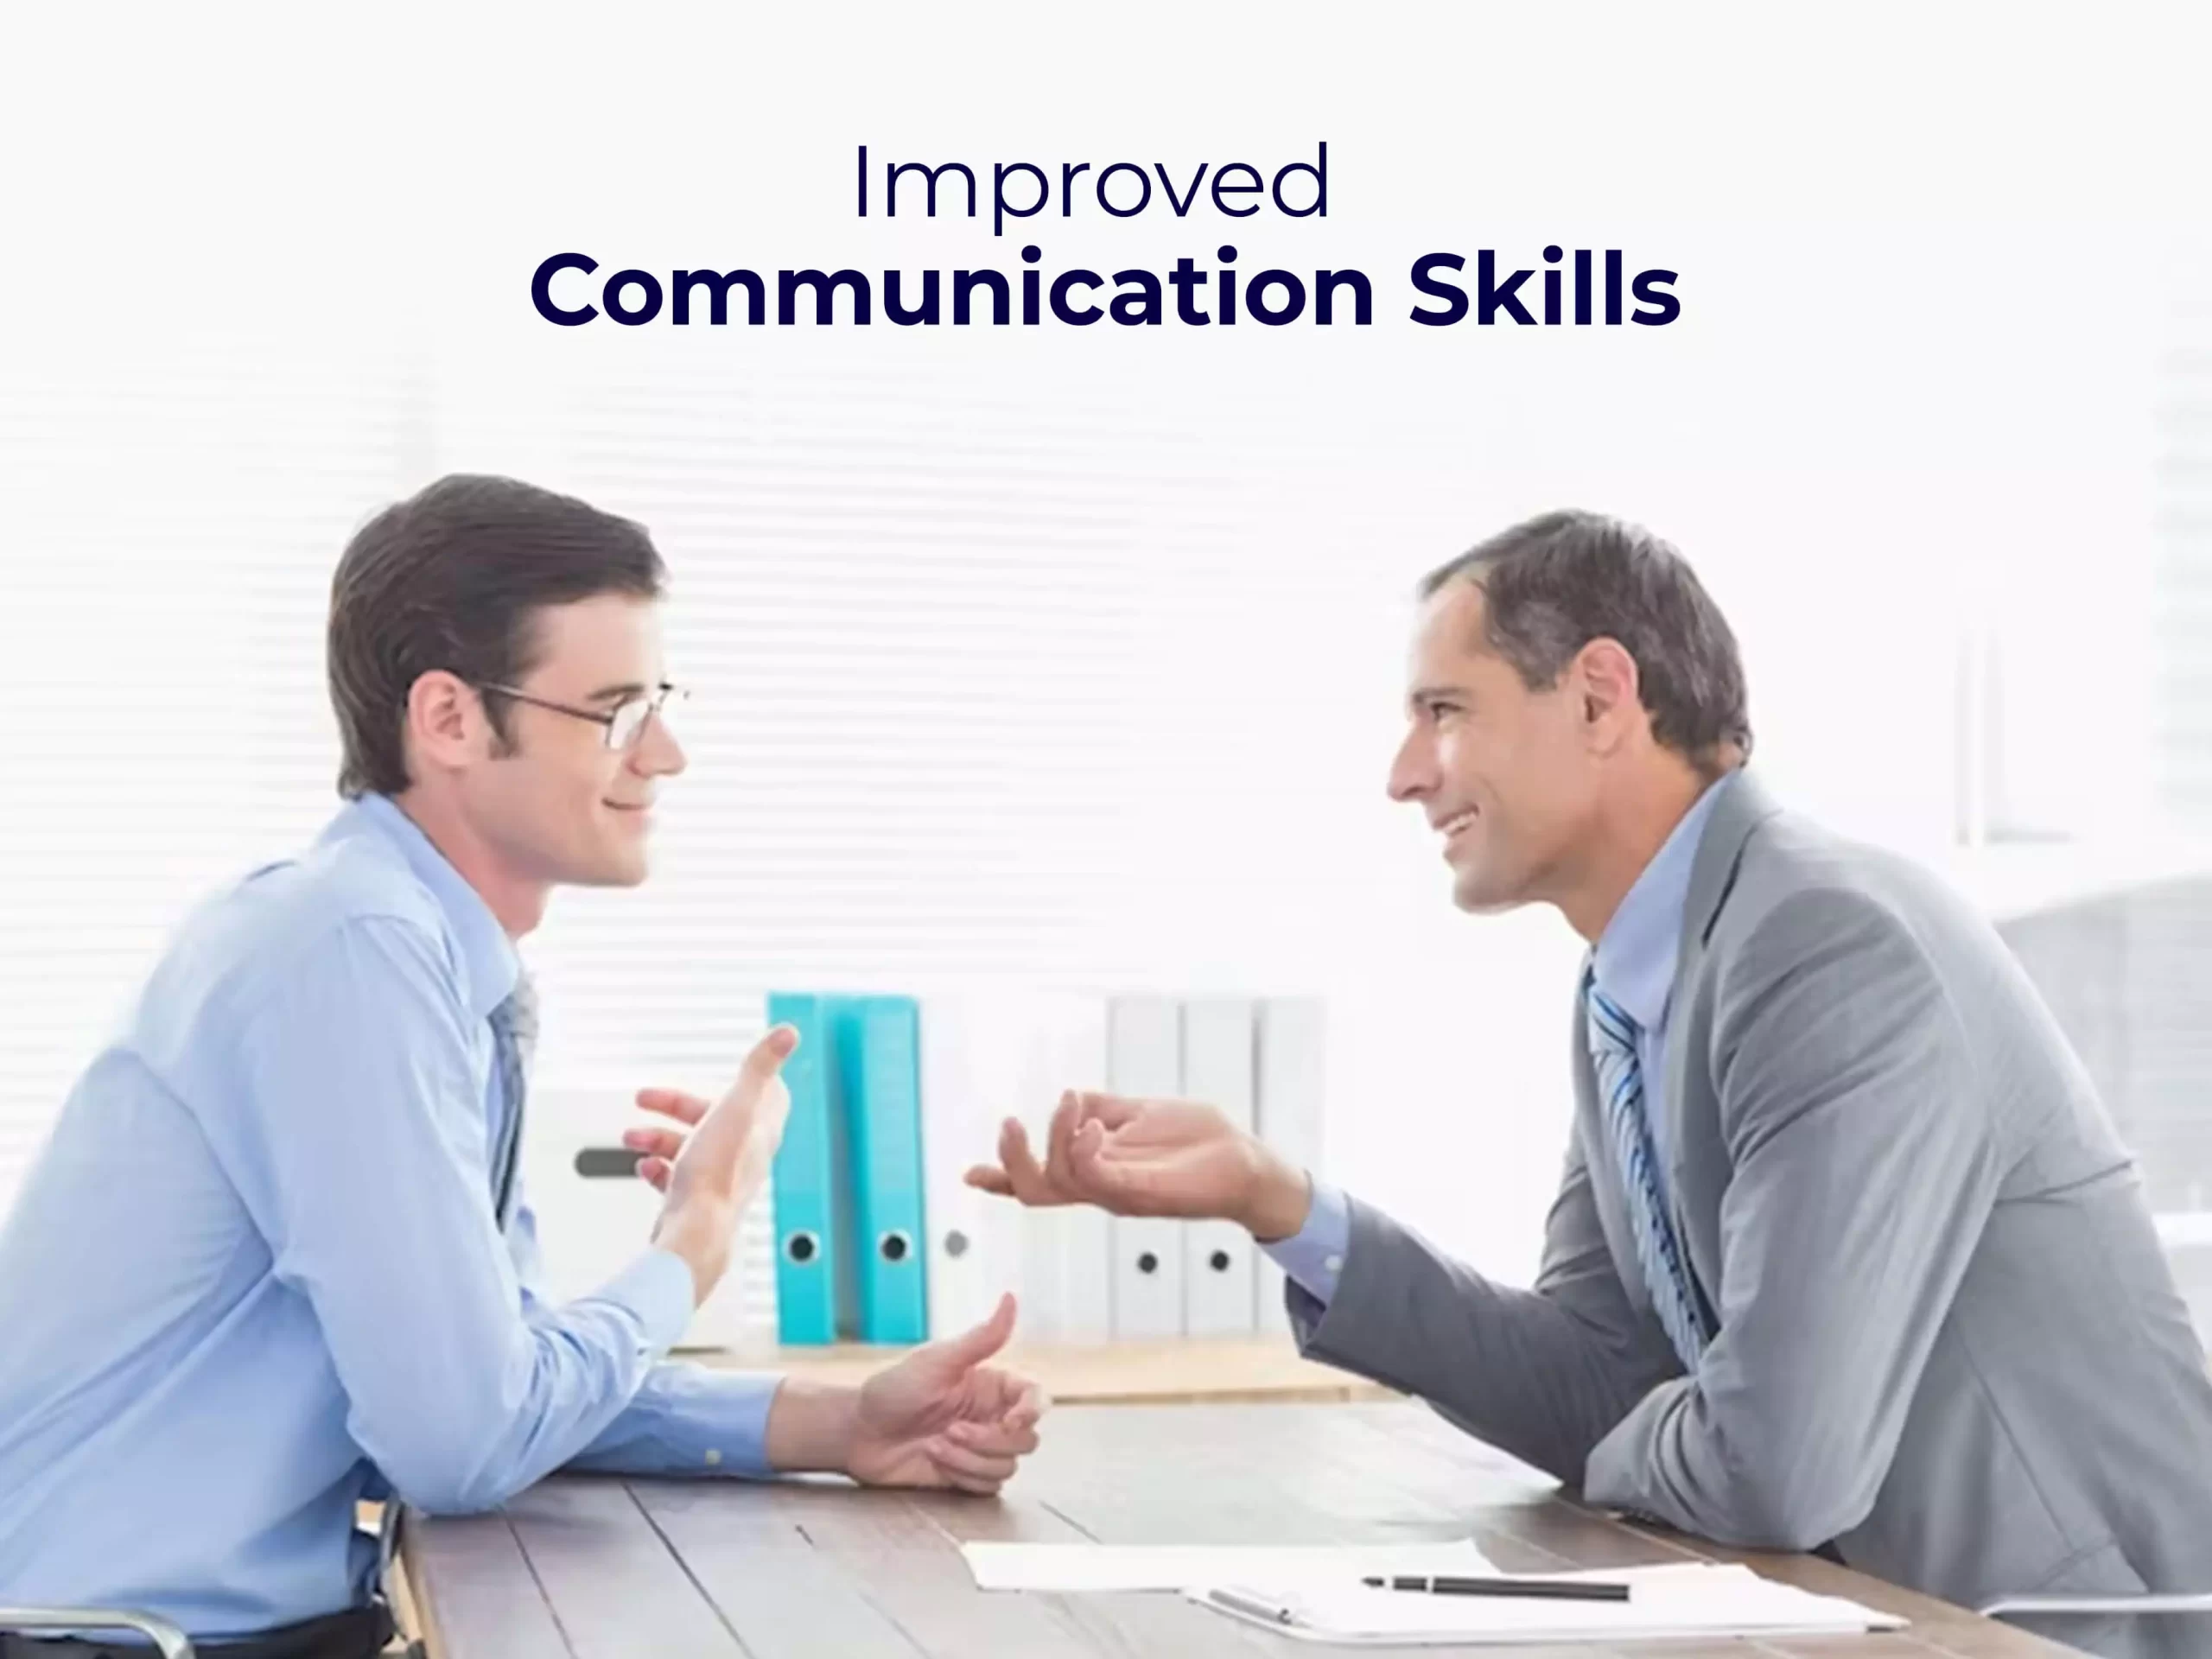 Improved communication skills